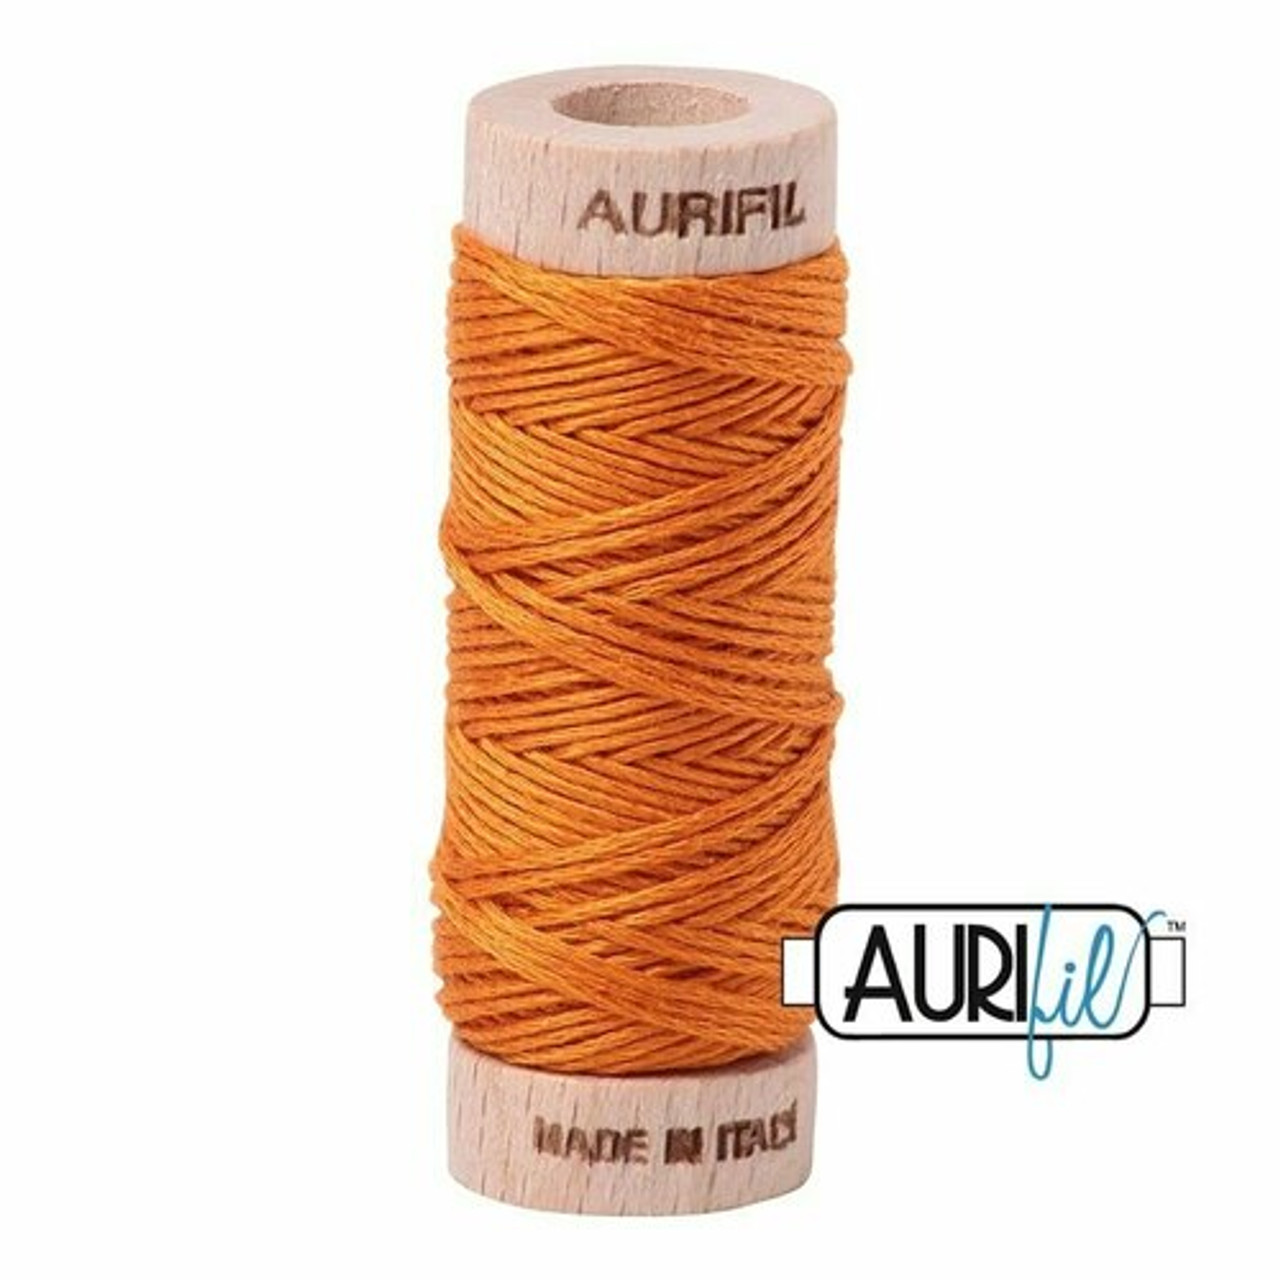 Aurifil 1133 - Bright Orange